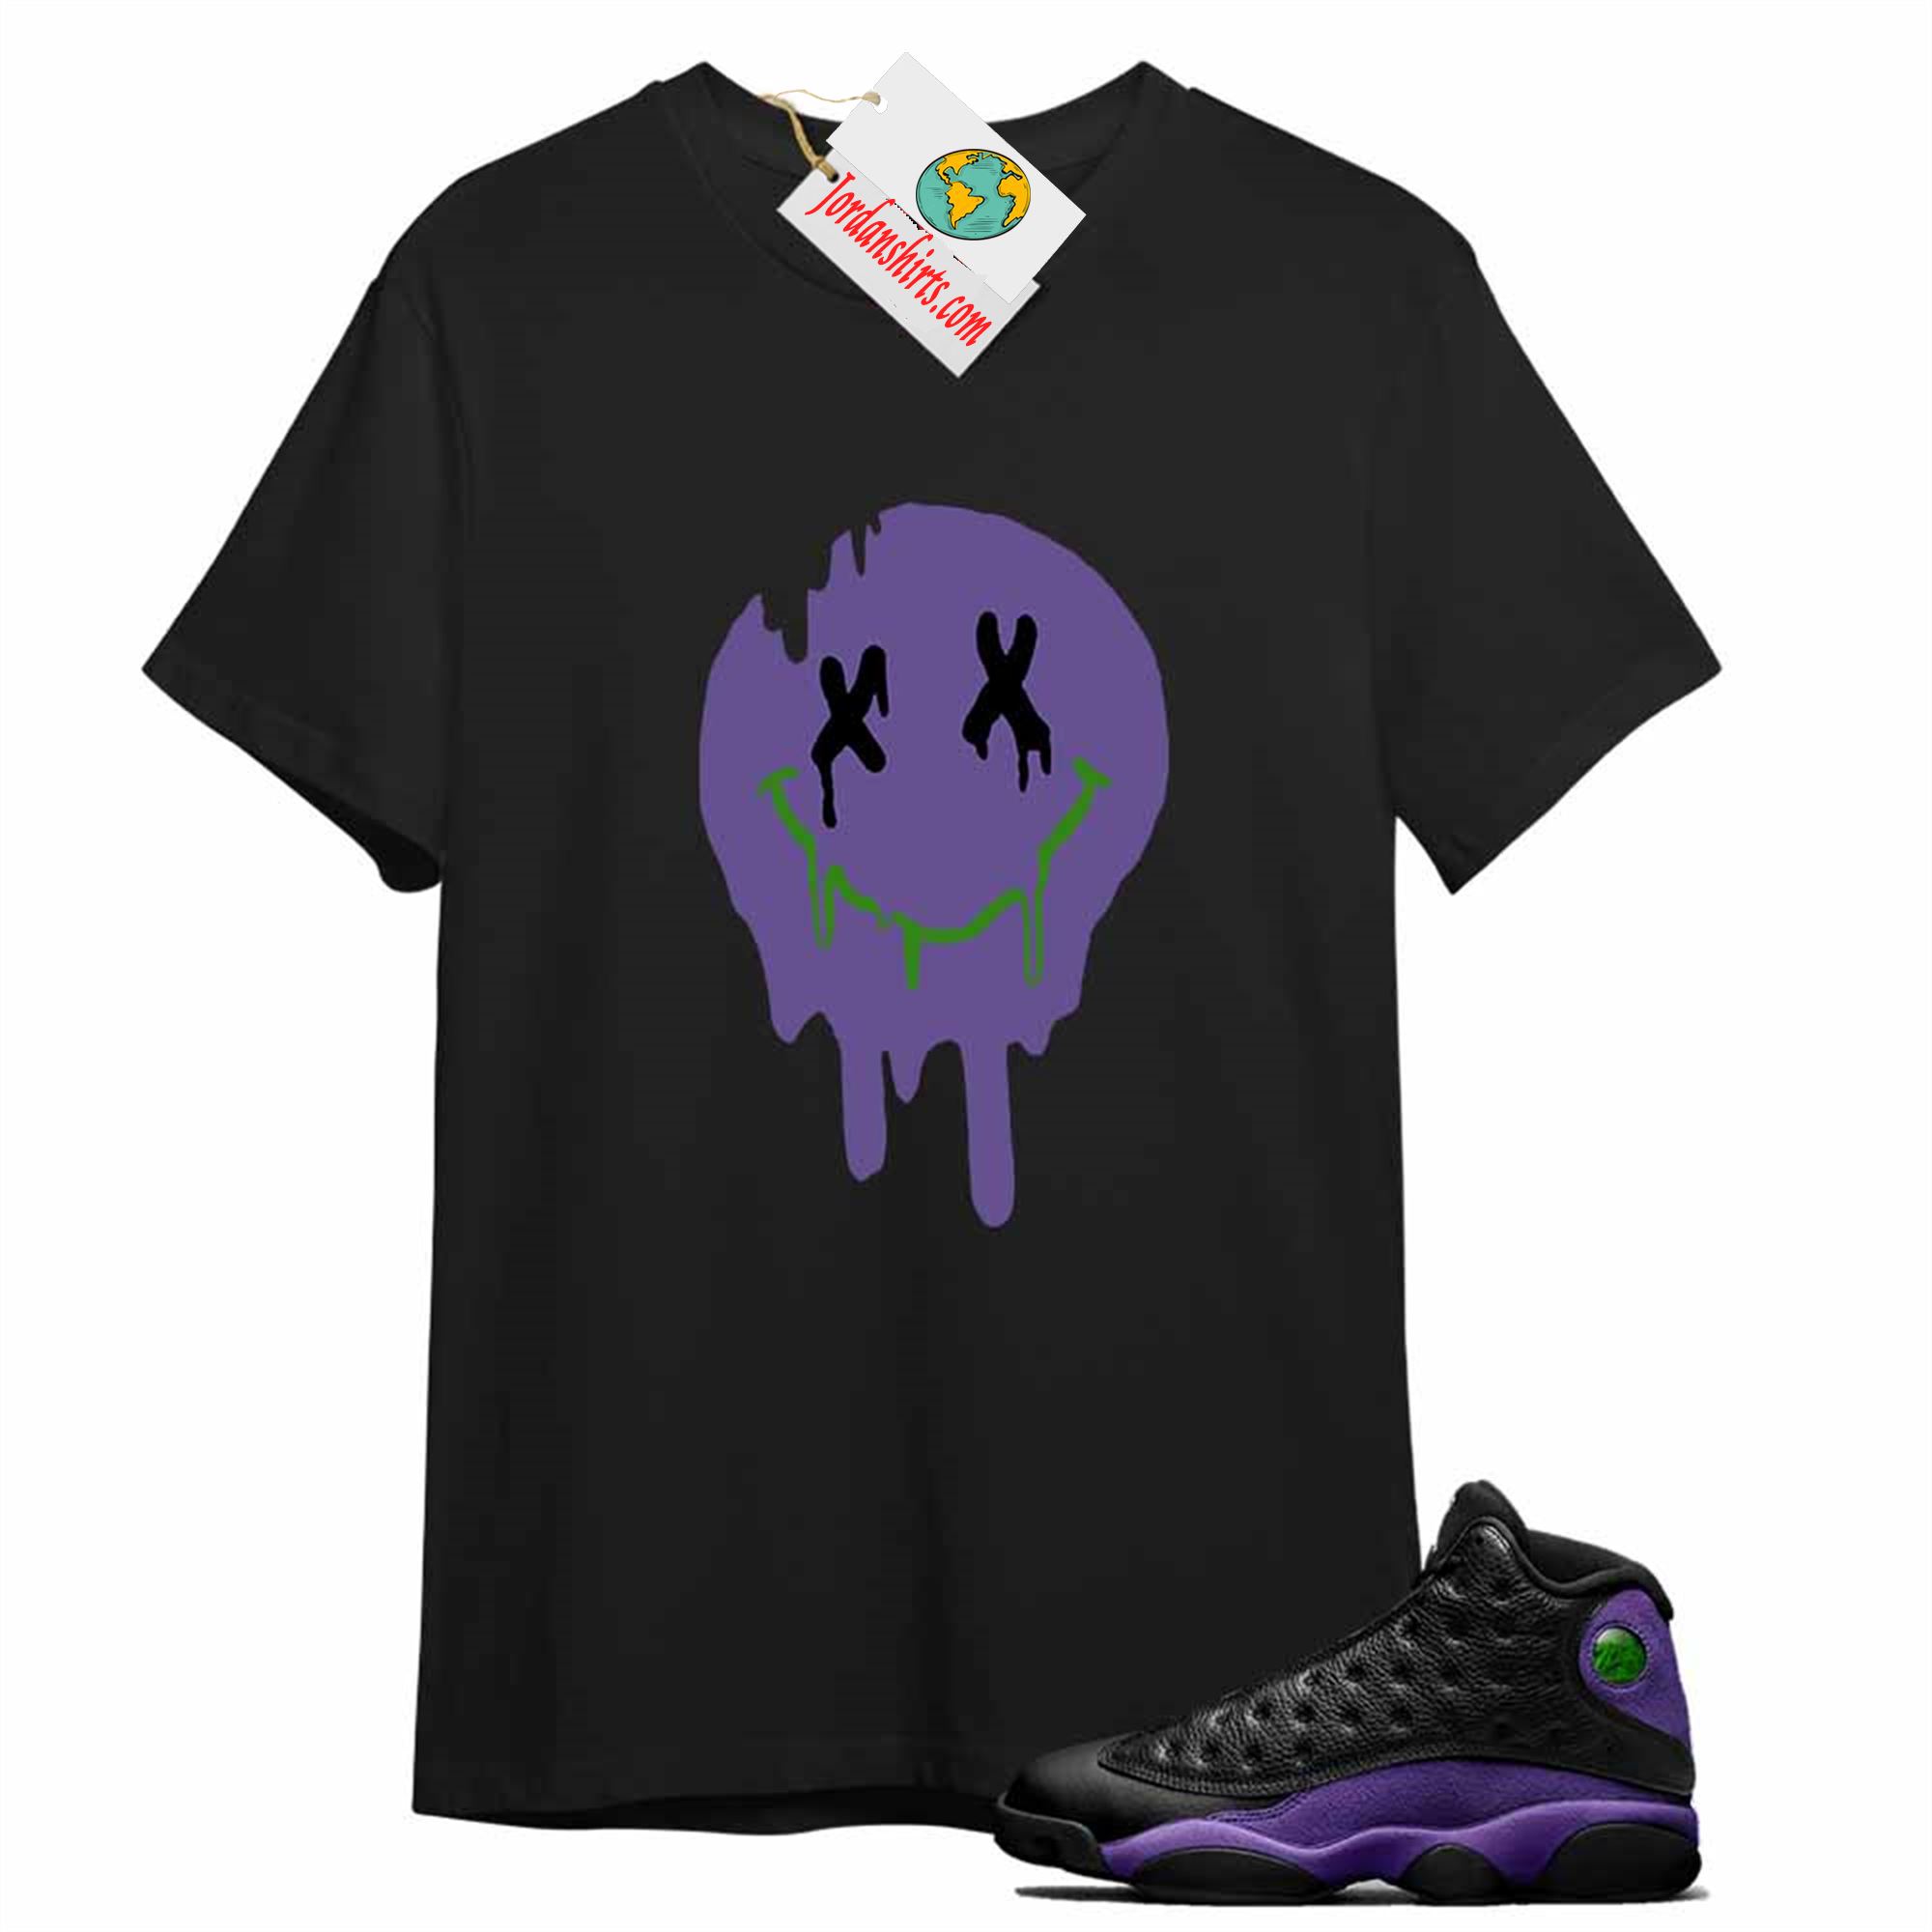 Jordan 13 Shirt, Happy Face Dripping Black T-shirt Air Jordan 13 Court Purple 13s Size Up To 5xl